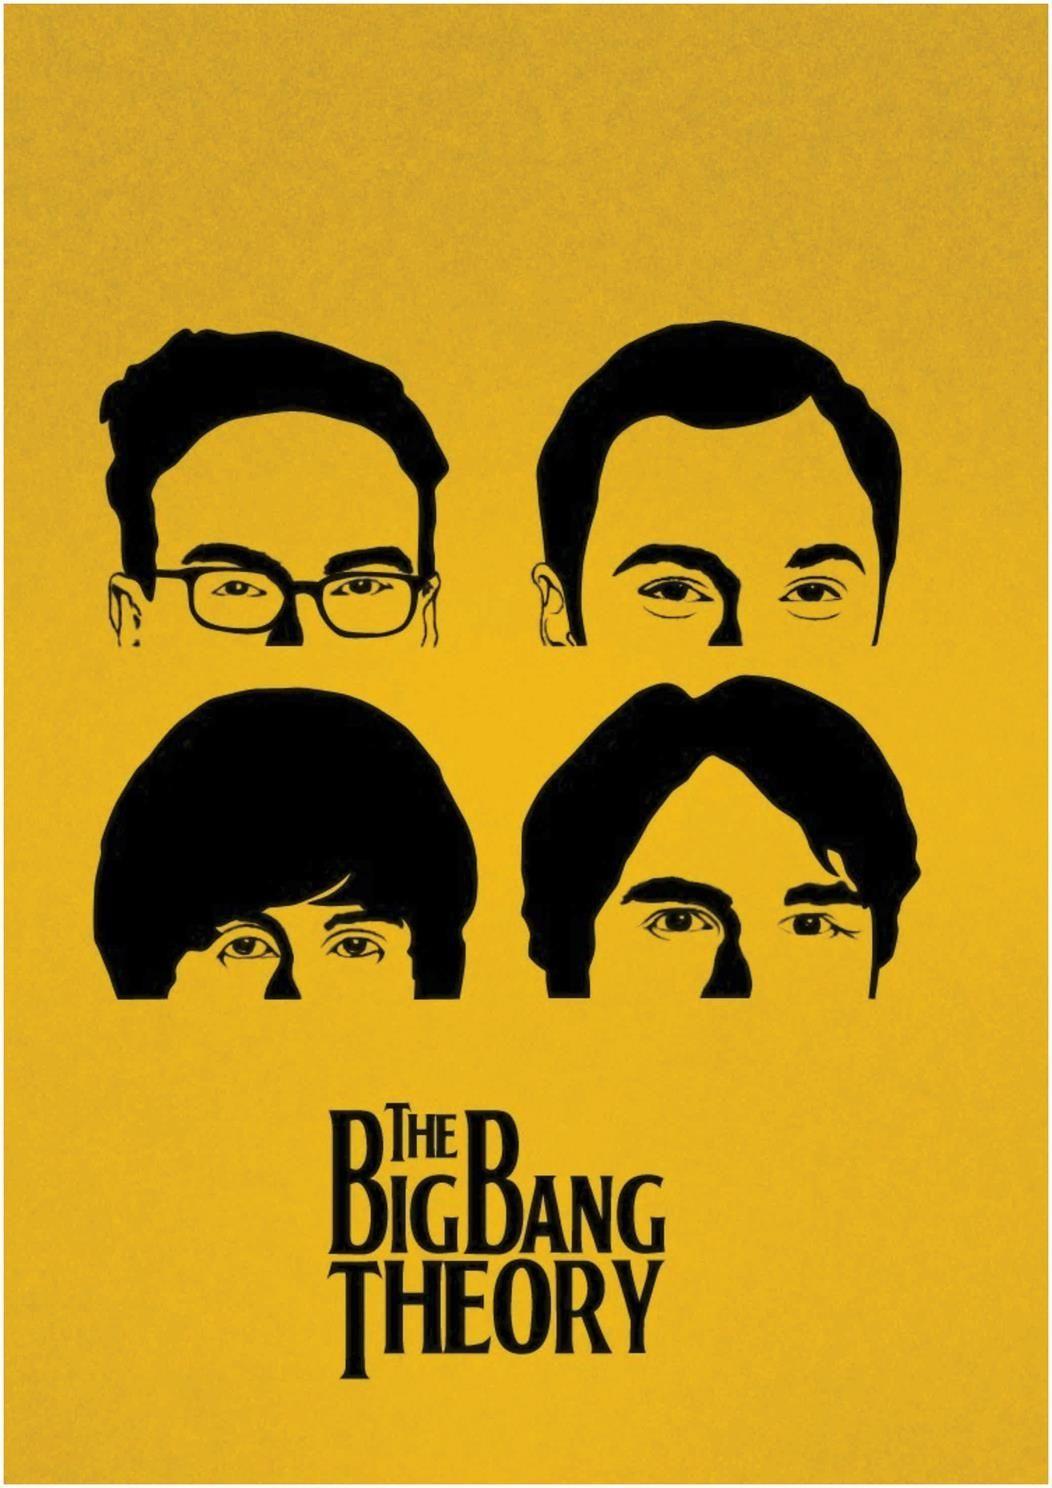 The Big Bang Theory Iphone Wallpapers Top Free The Big Bang Theory Iphone Backgrounds Wallpaperaccess